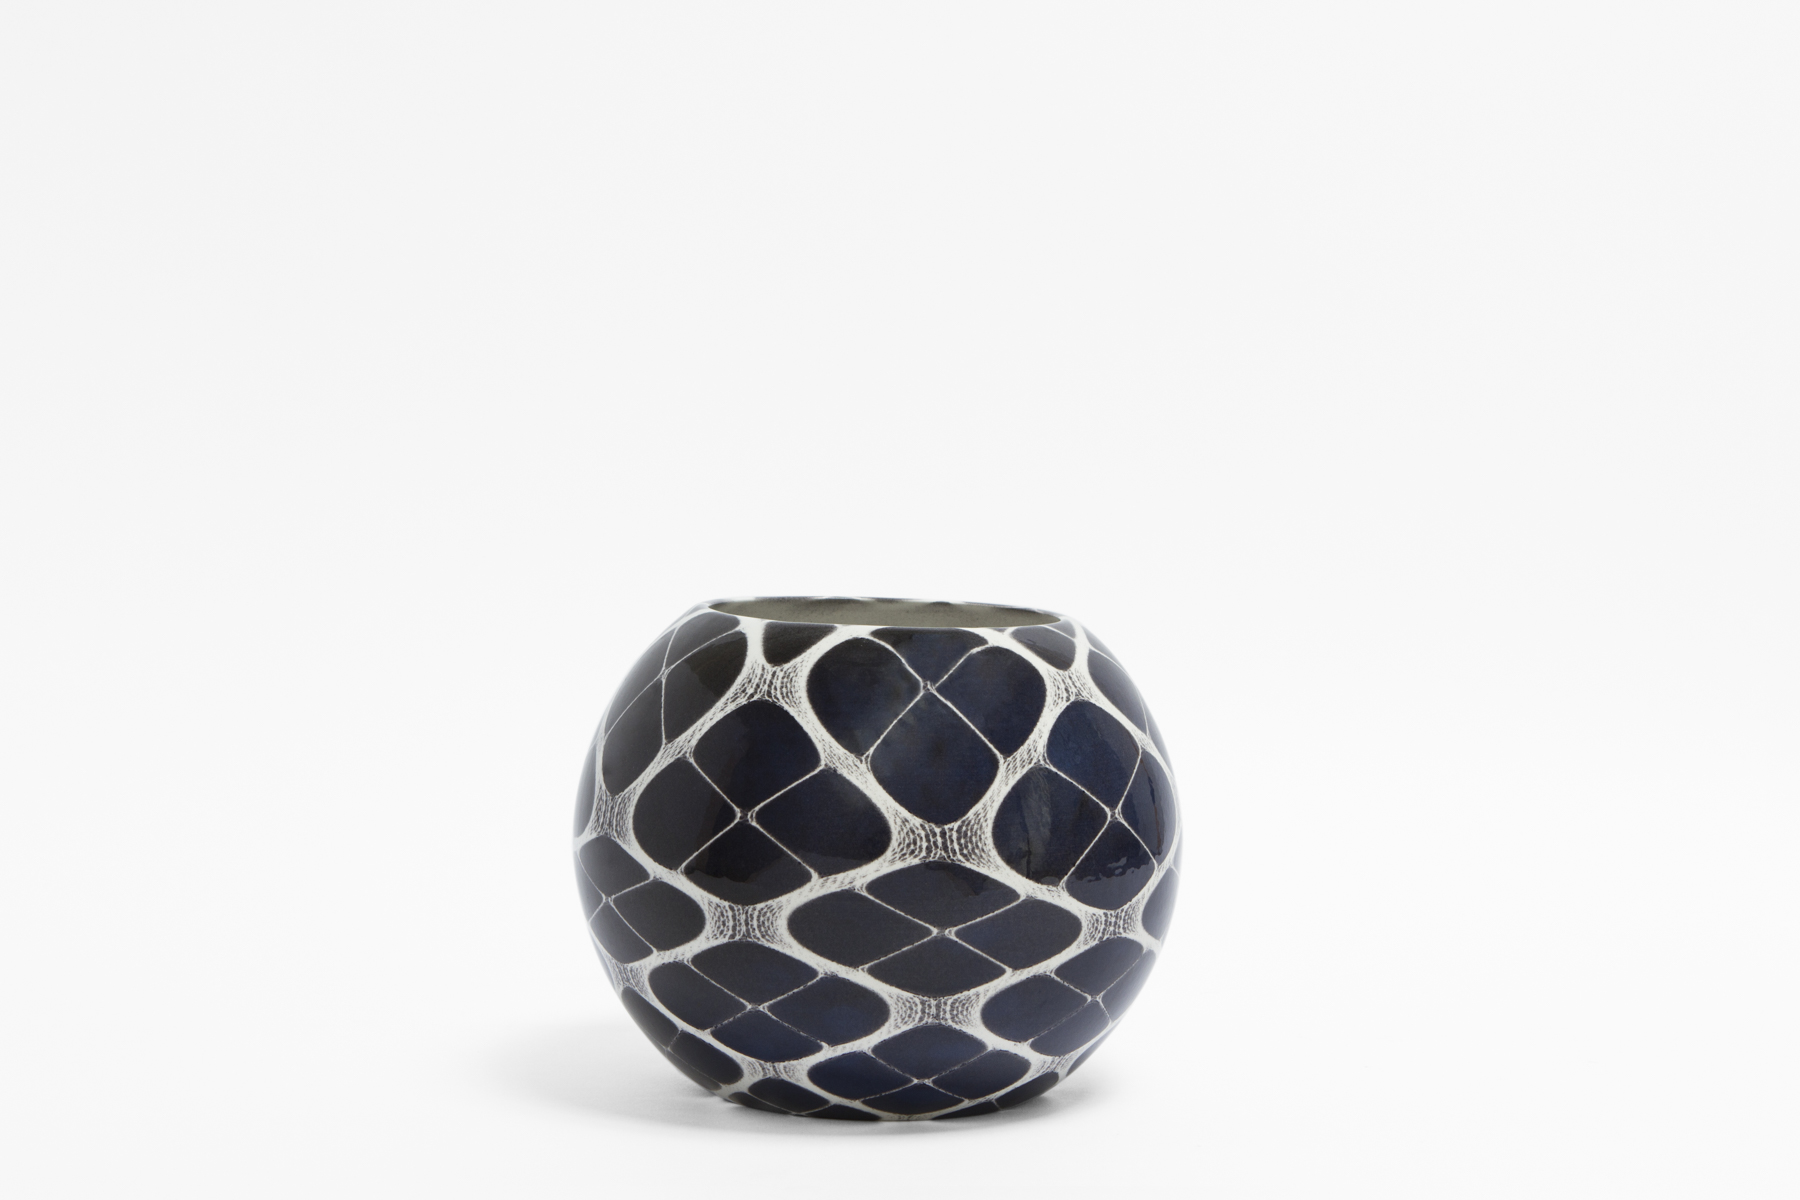 Vasi pattern by Ludek Lancellotti